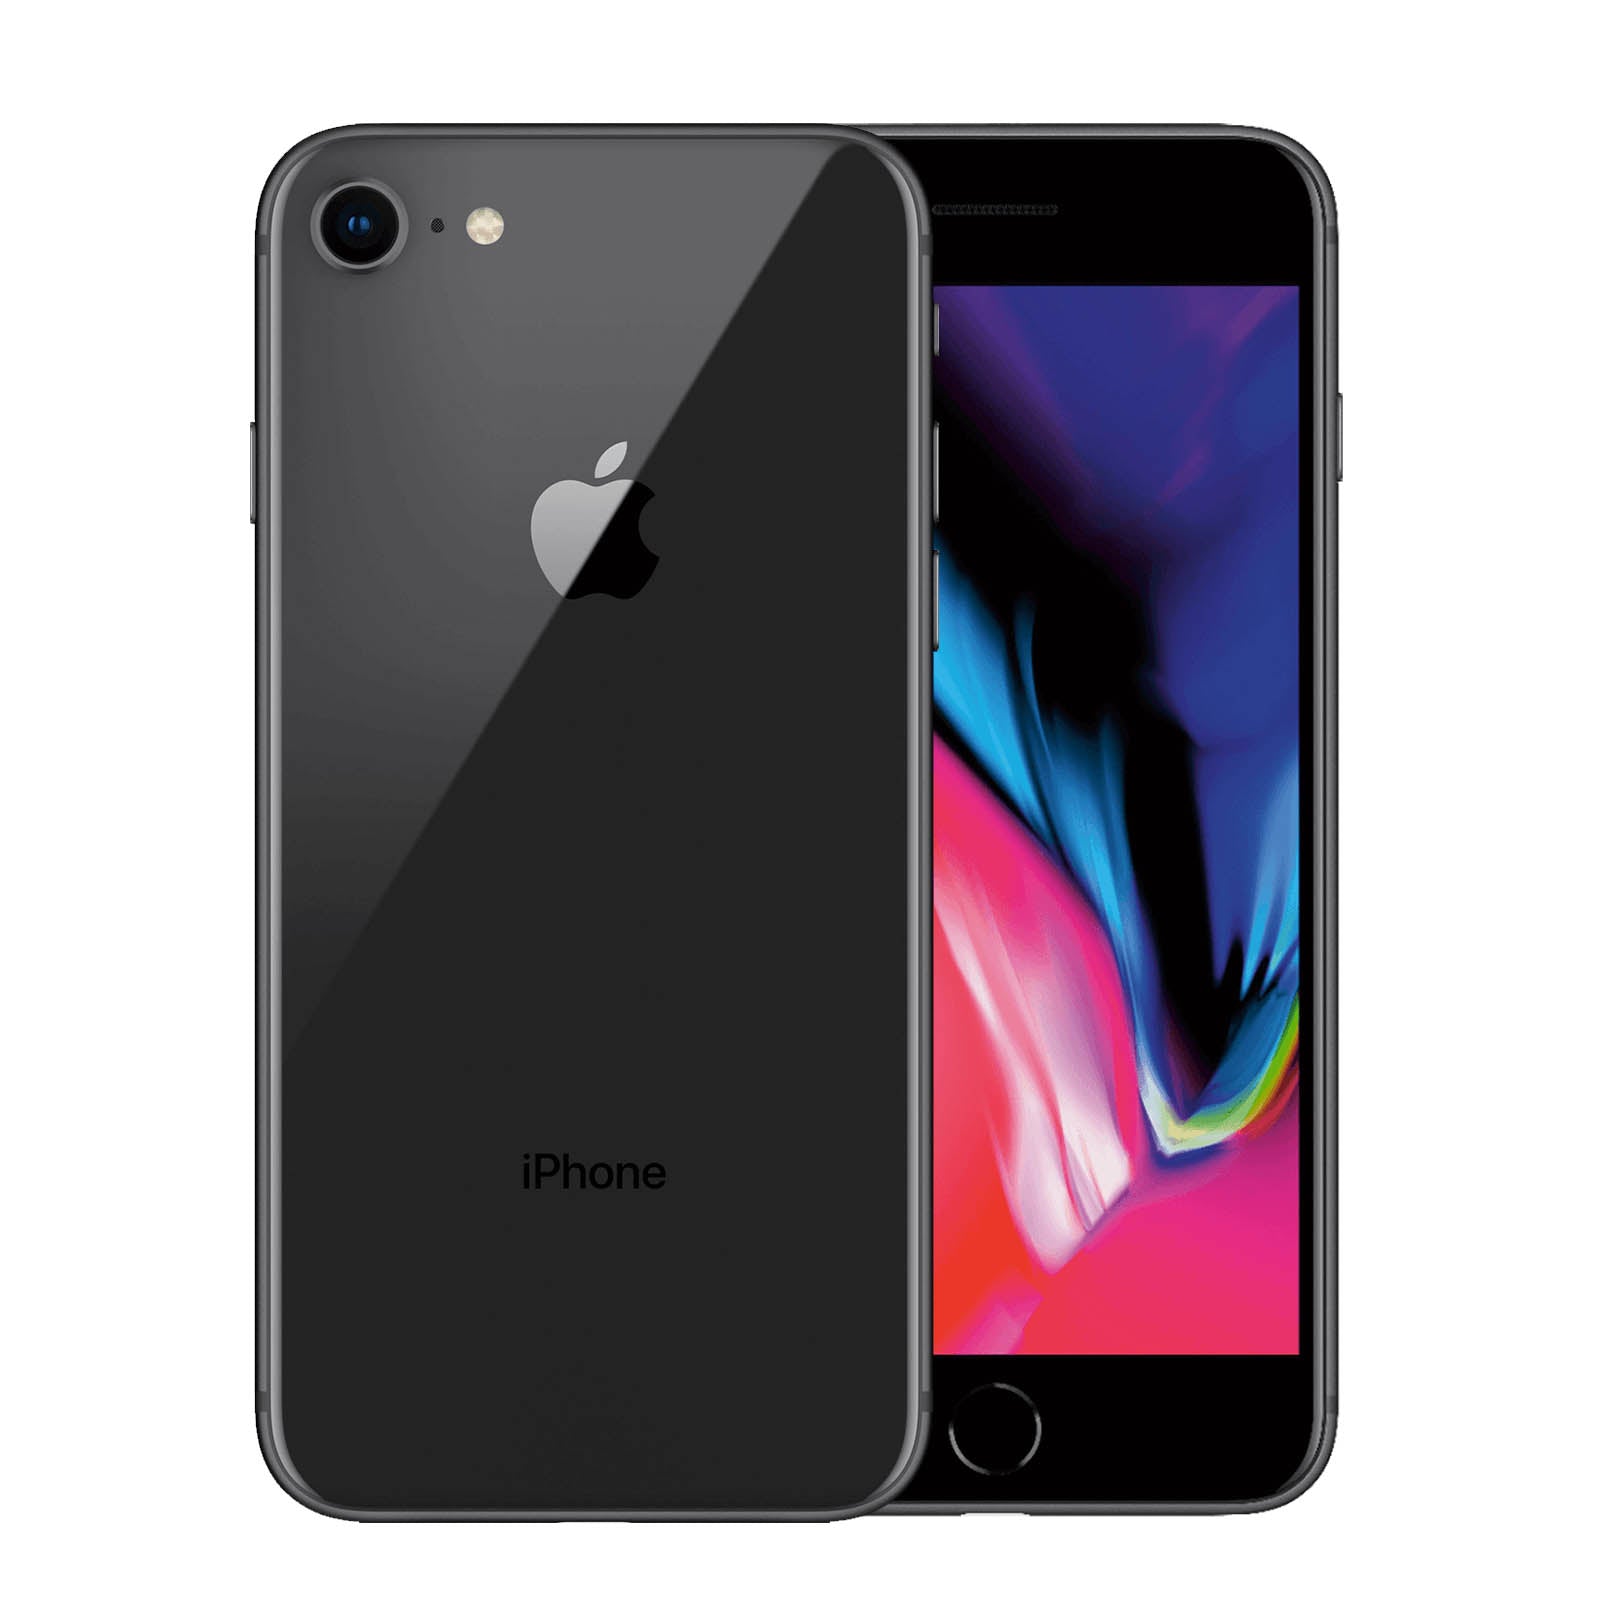 Apple iPhone 8 128GB - Space Grey